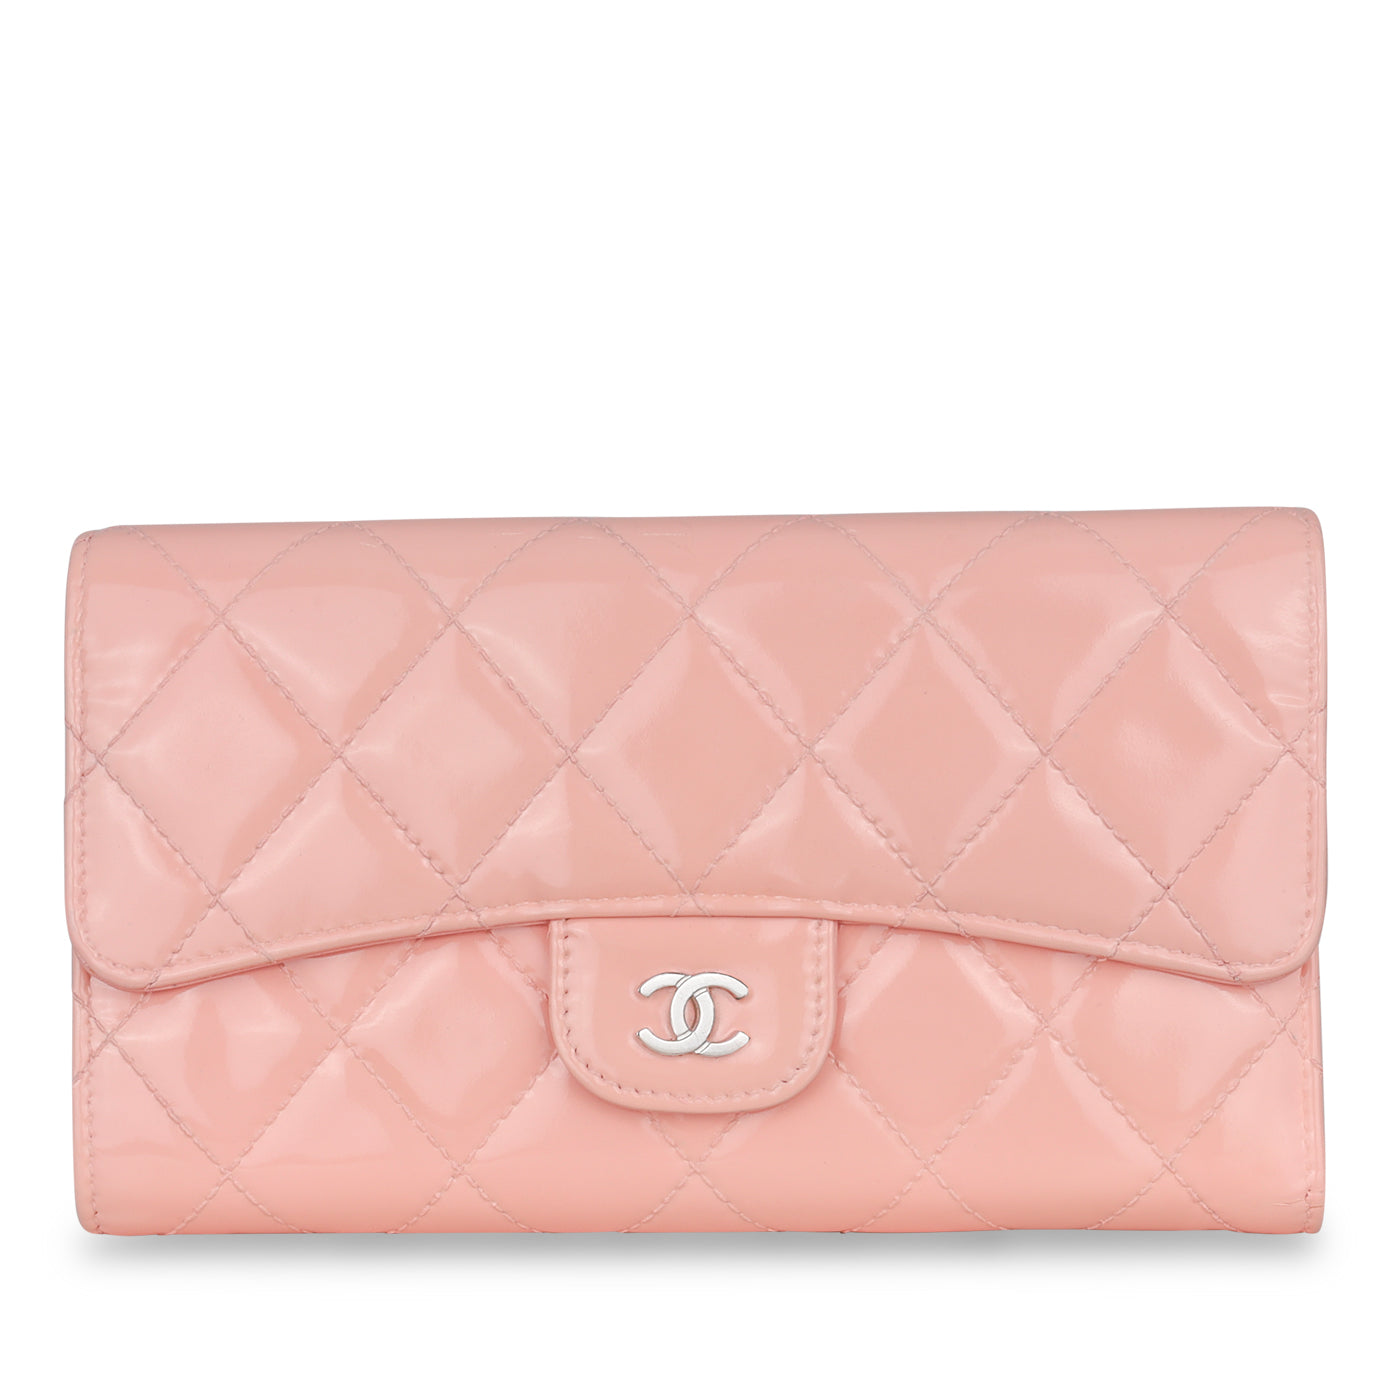 Chanel Classic Long Flap Wallet Ap0241 Y33352 NM366, Beige, One Size